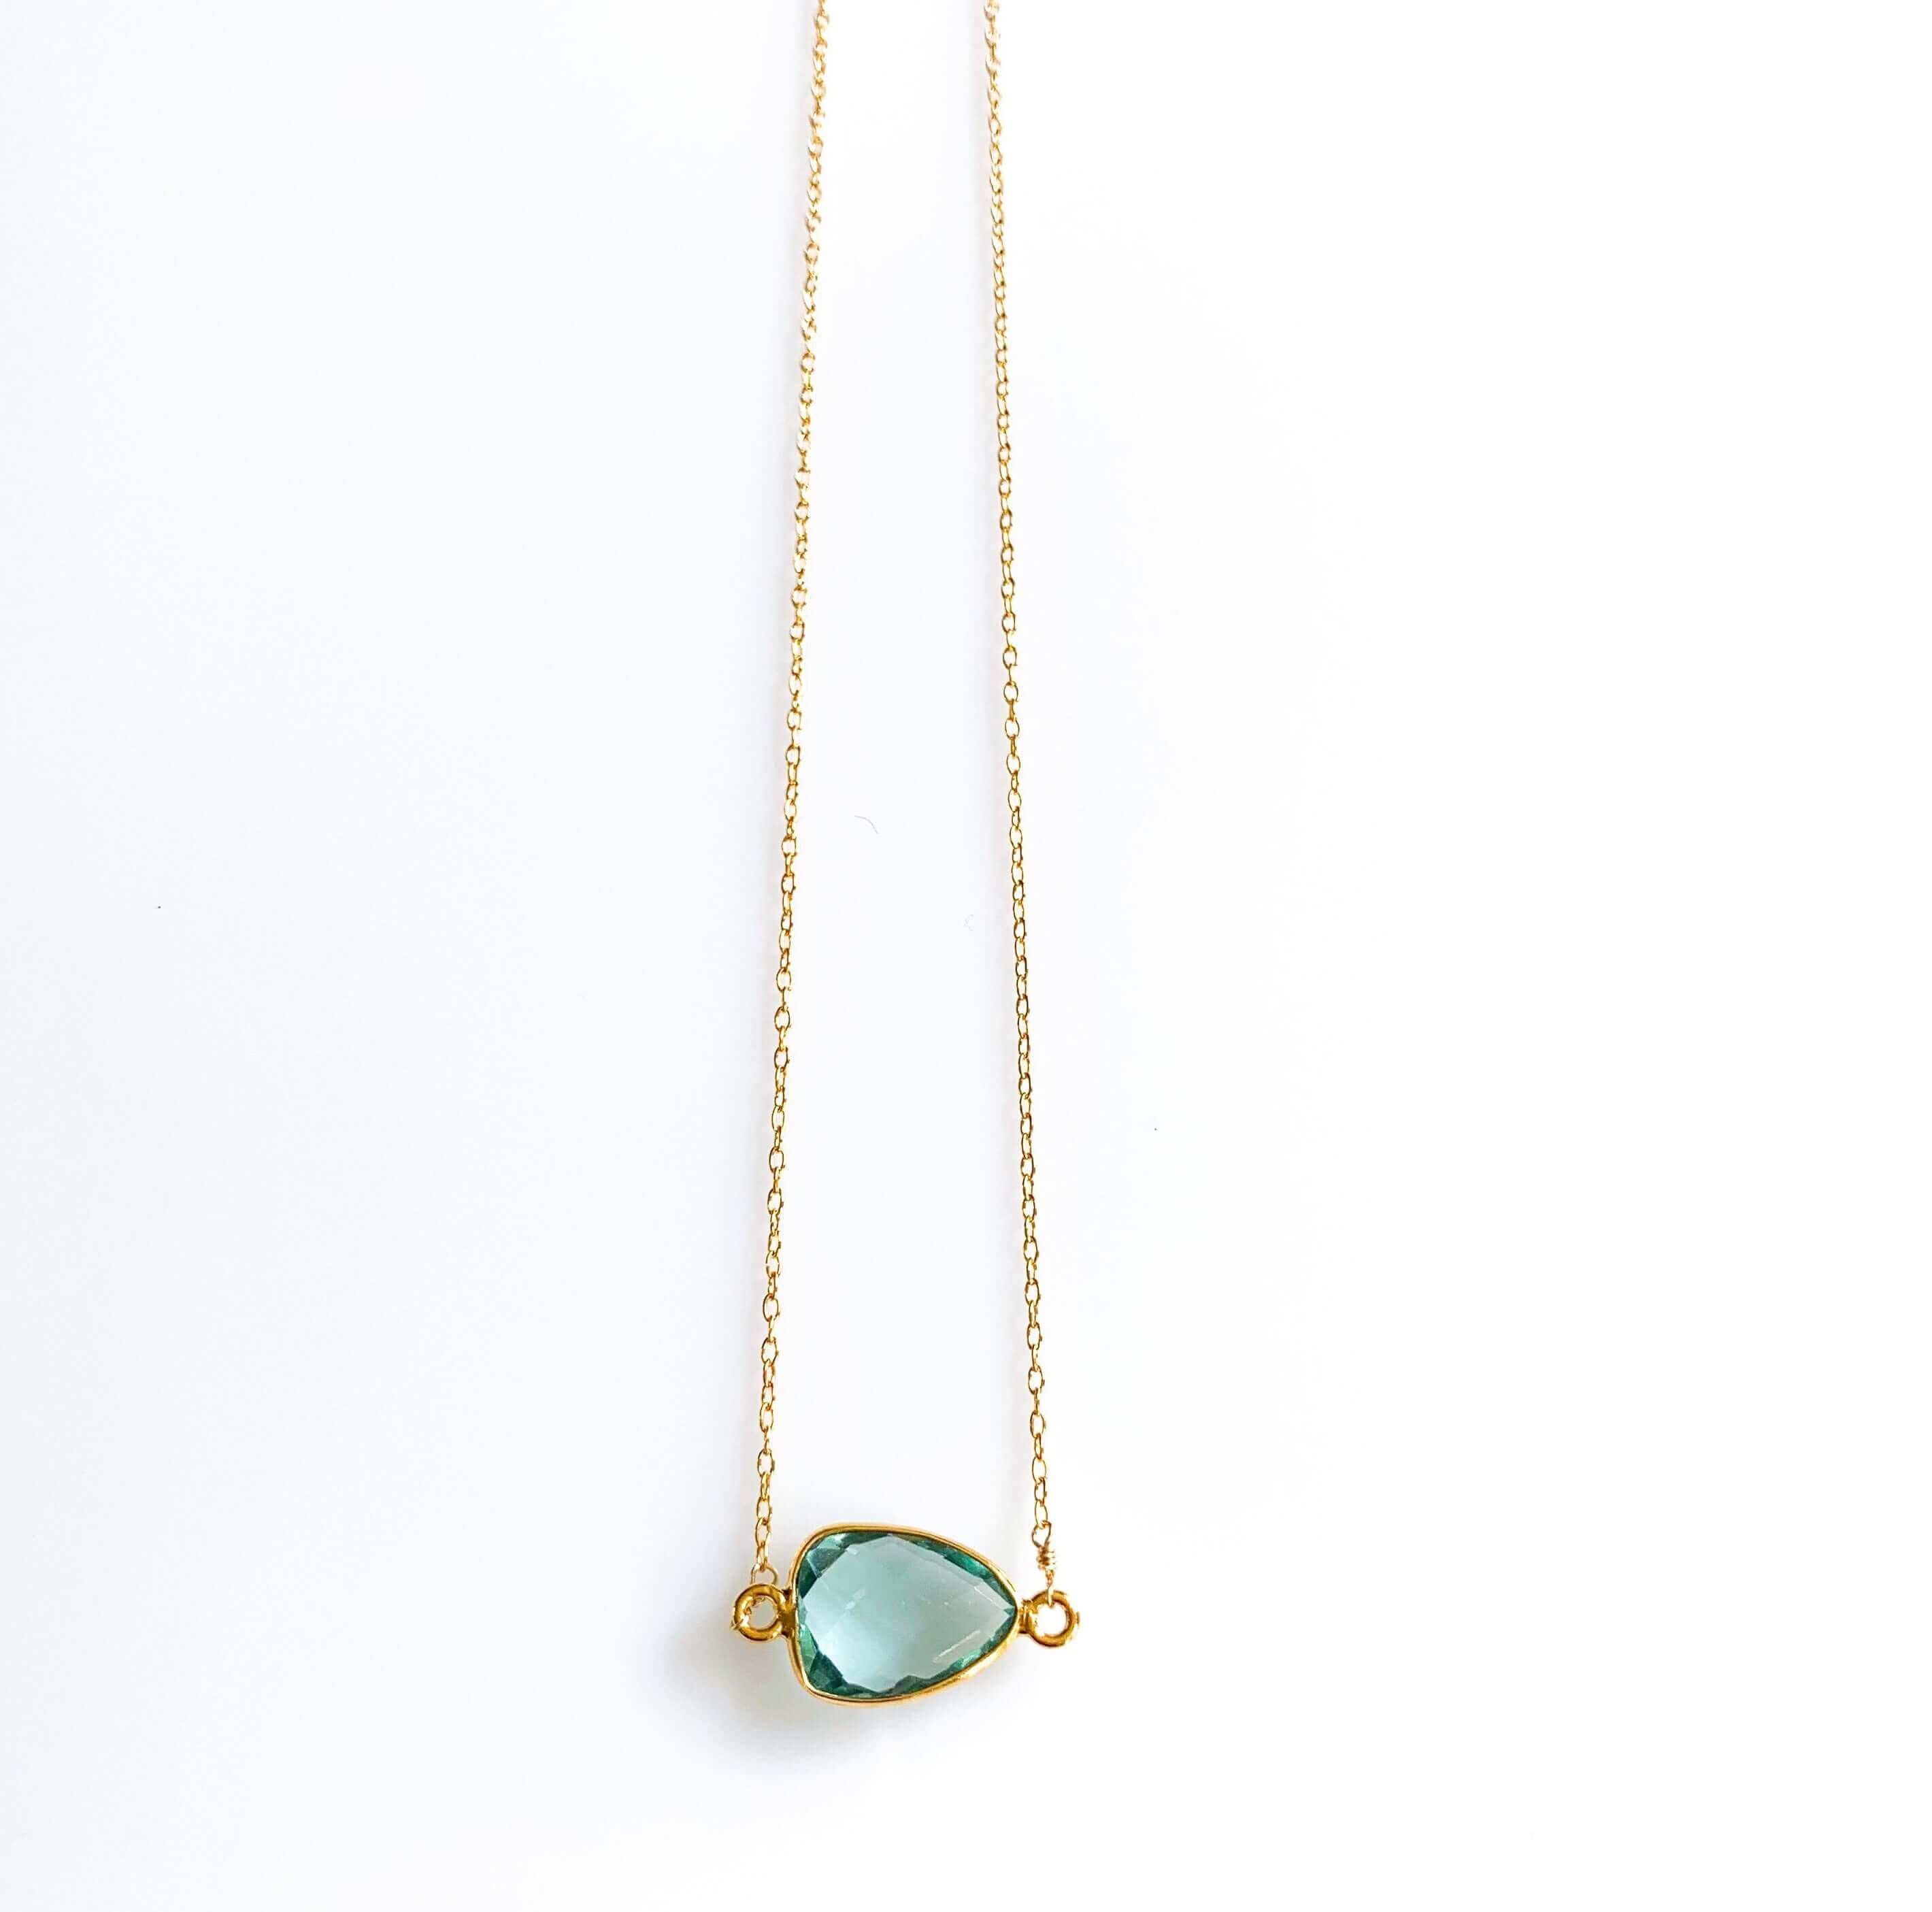 Minimalist Gold Necklaces with Bezel-Set Green Amethyst Stone